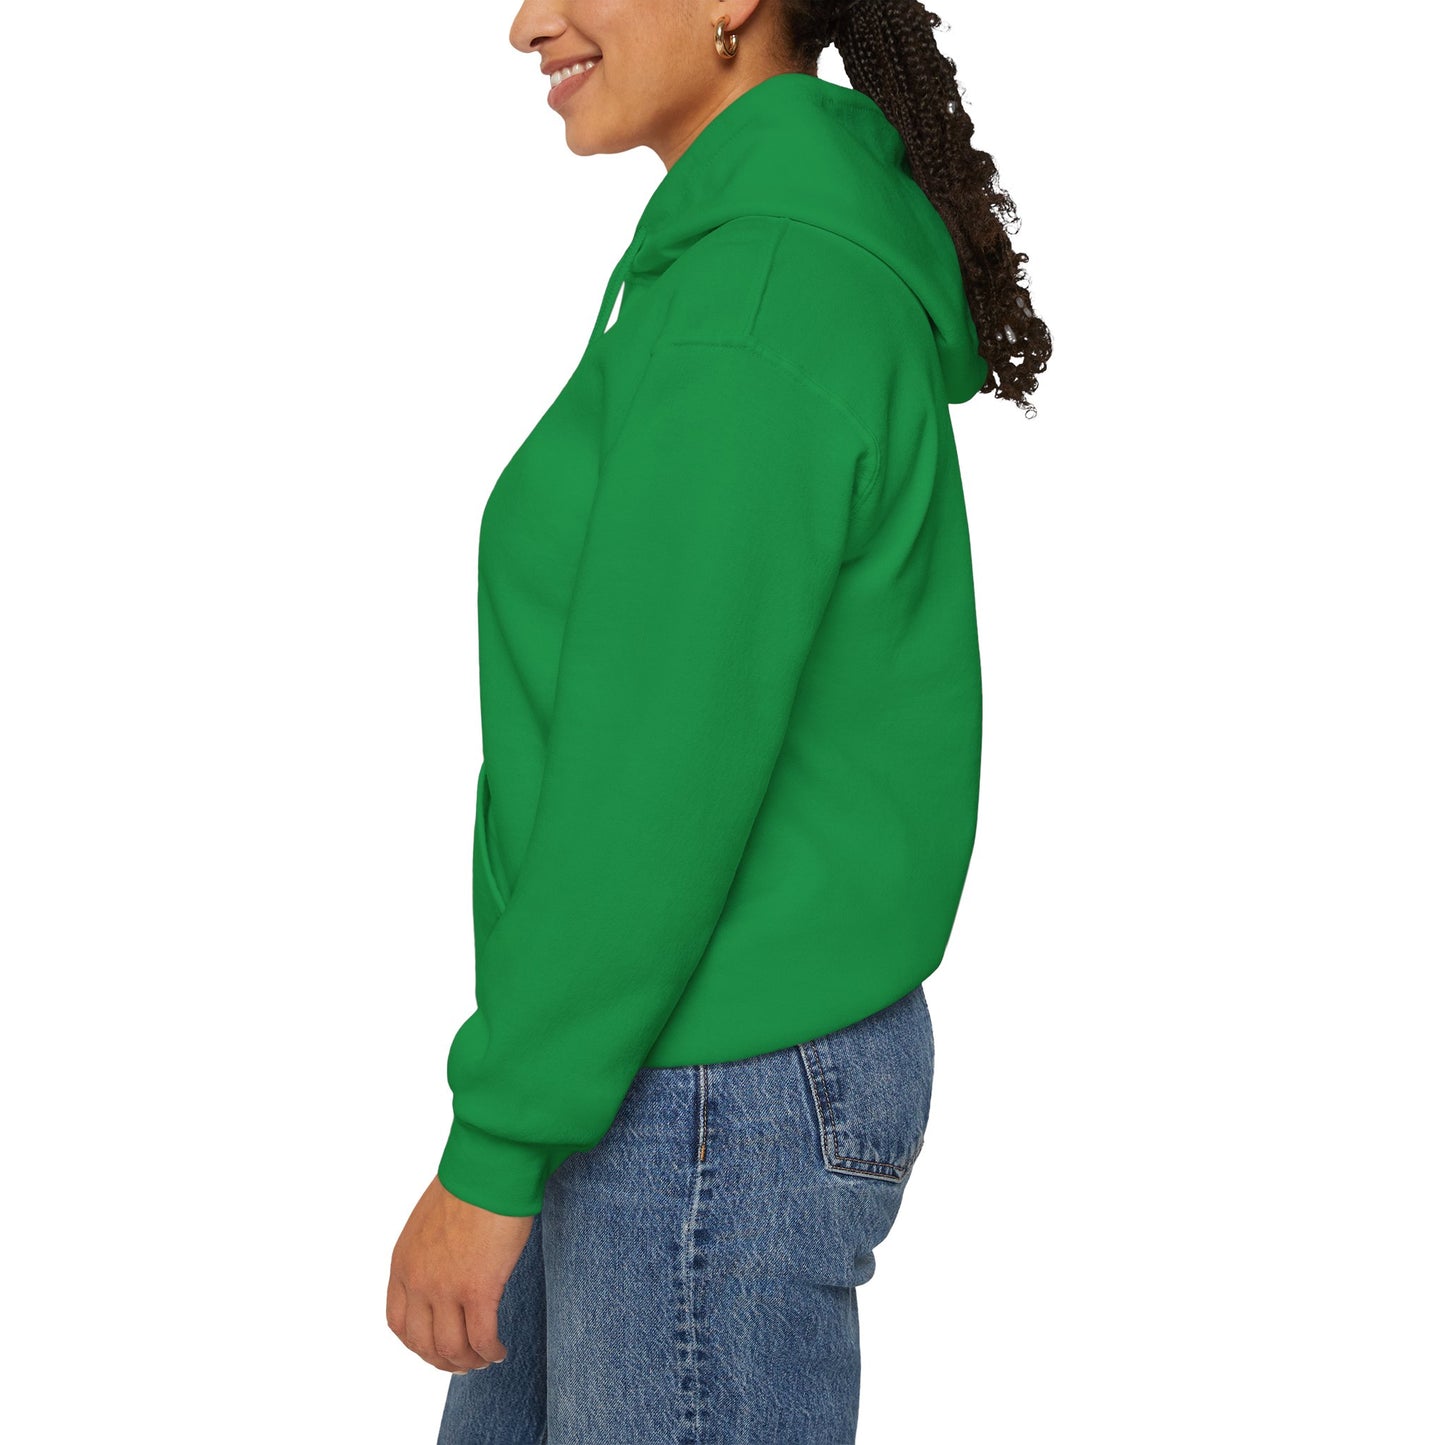 Happy Mother's Day - Unisex Heavy Blend™ Hooded Sweatshirt